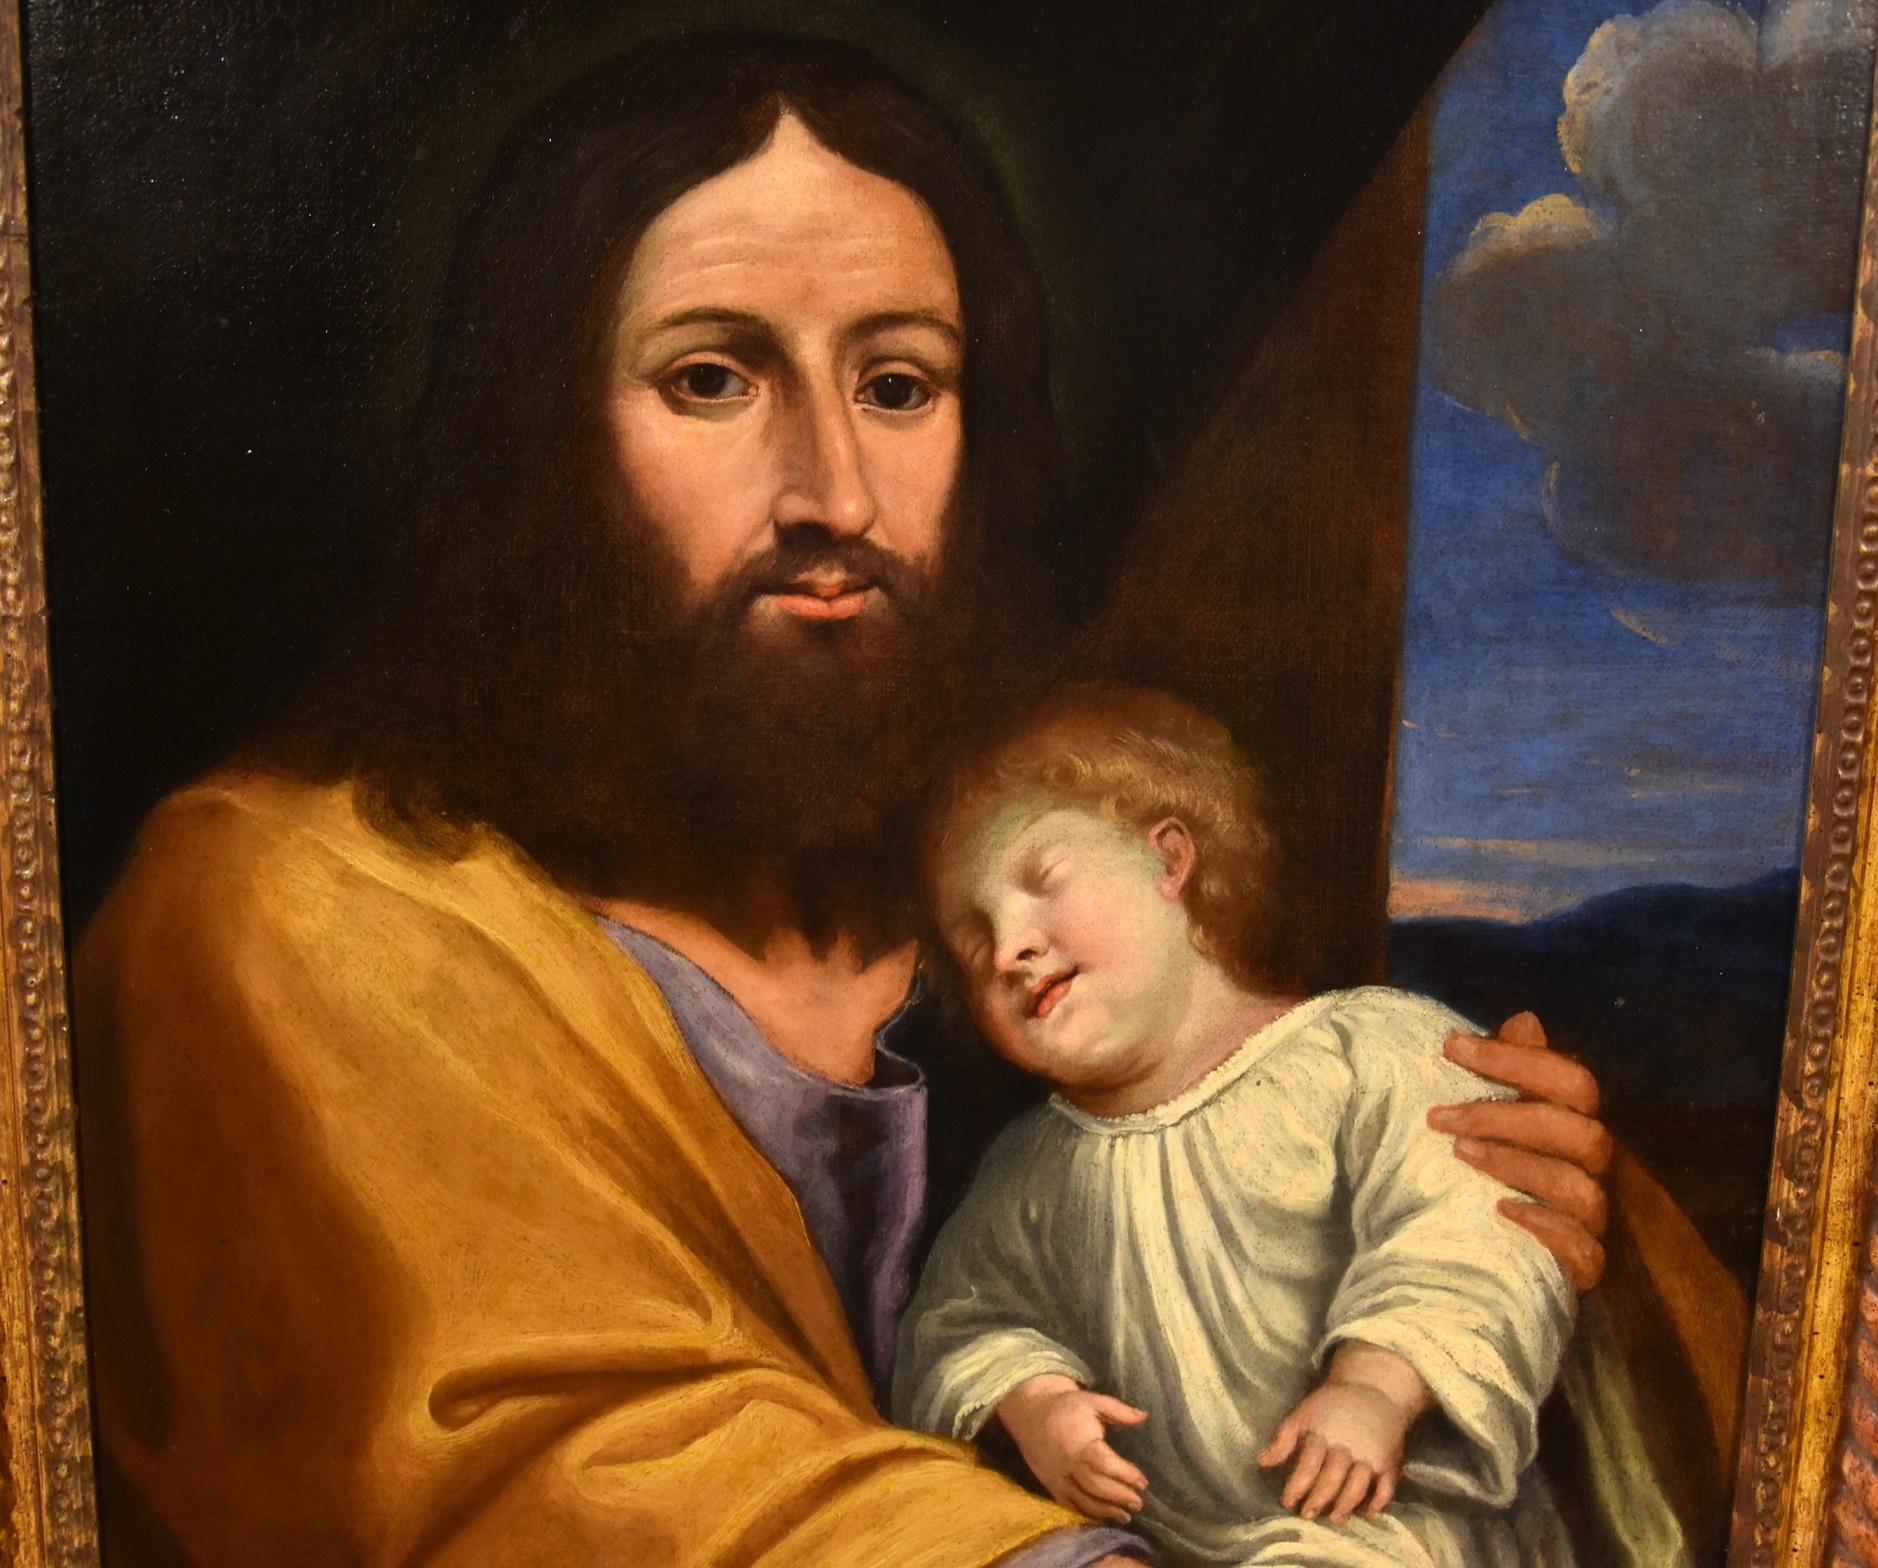 Jesus Son Salvi Paint Oil on canvas Old master 17th Century Italian Religious For Sale 3